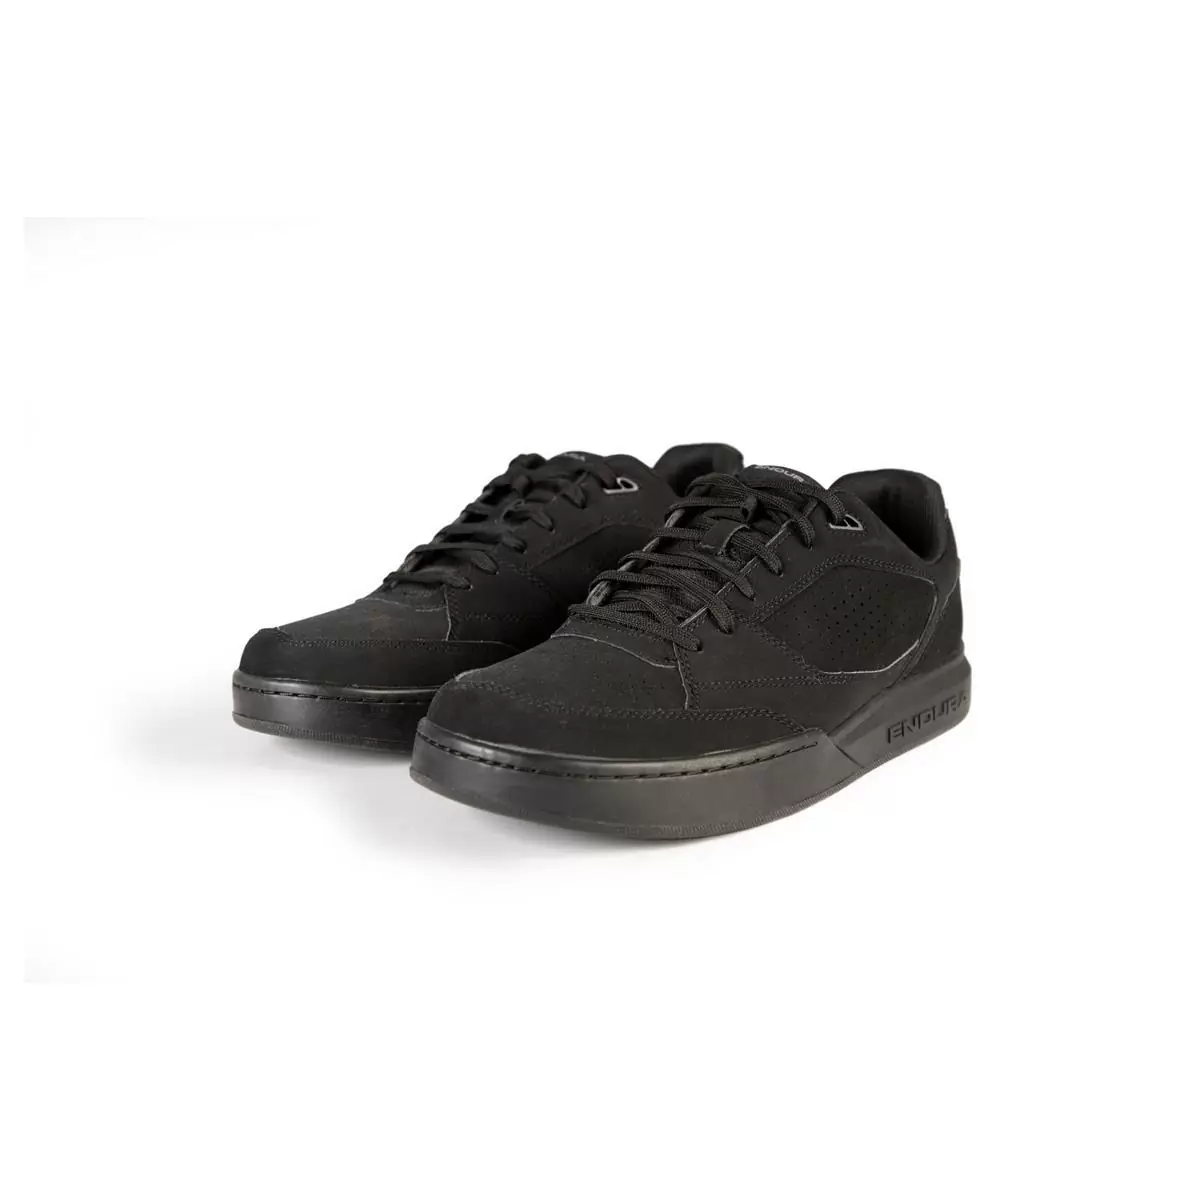 Hummvee Flat Pedal Shoes Black Size 47 - image